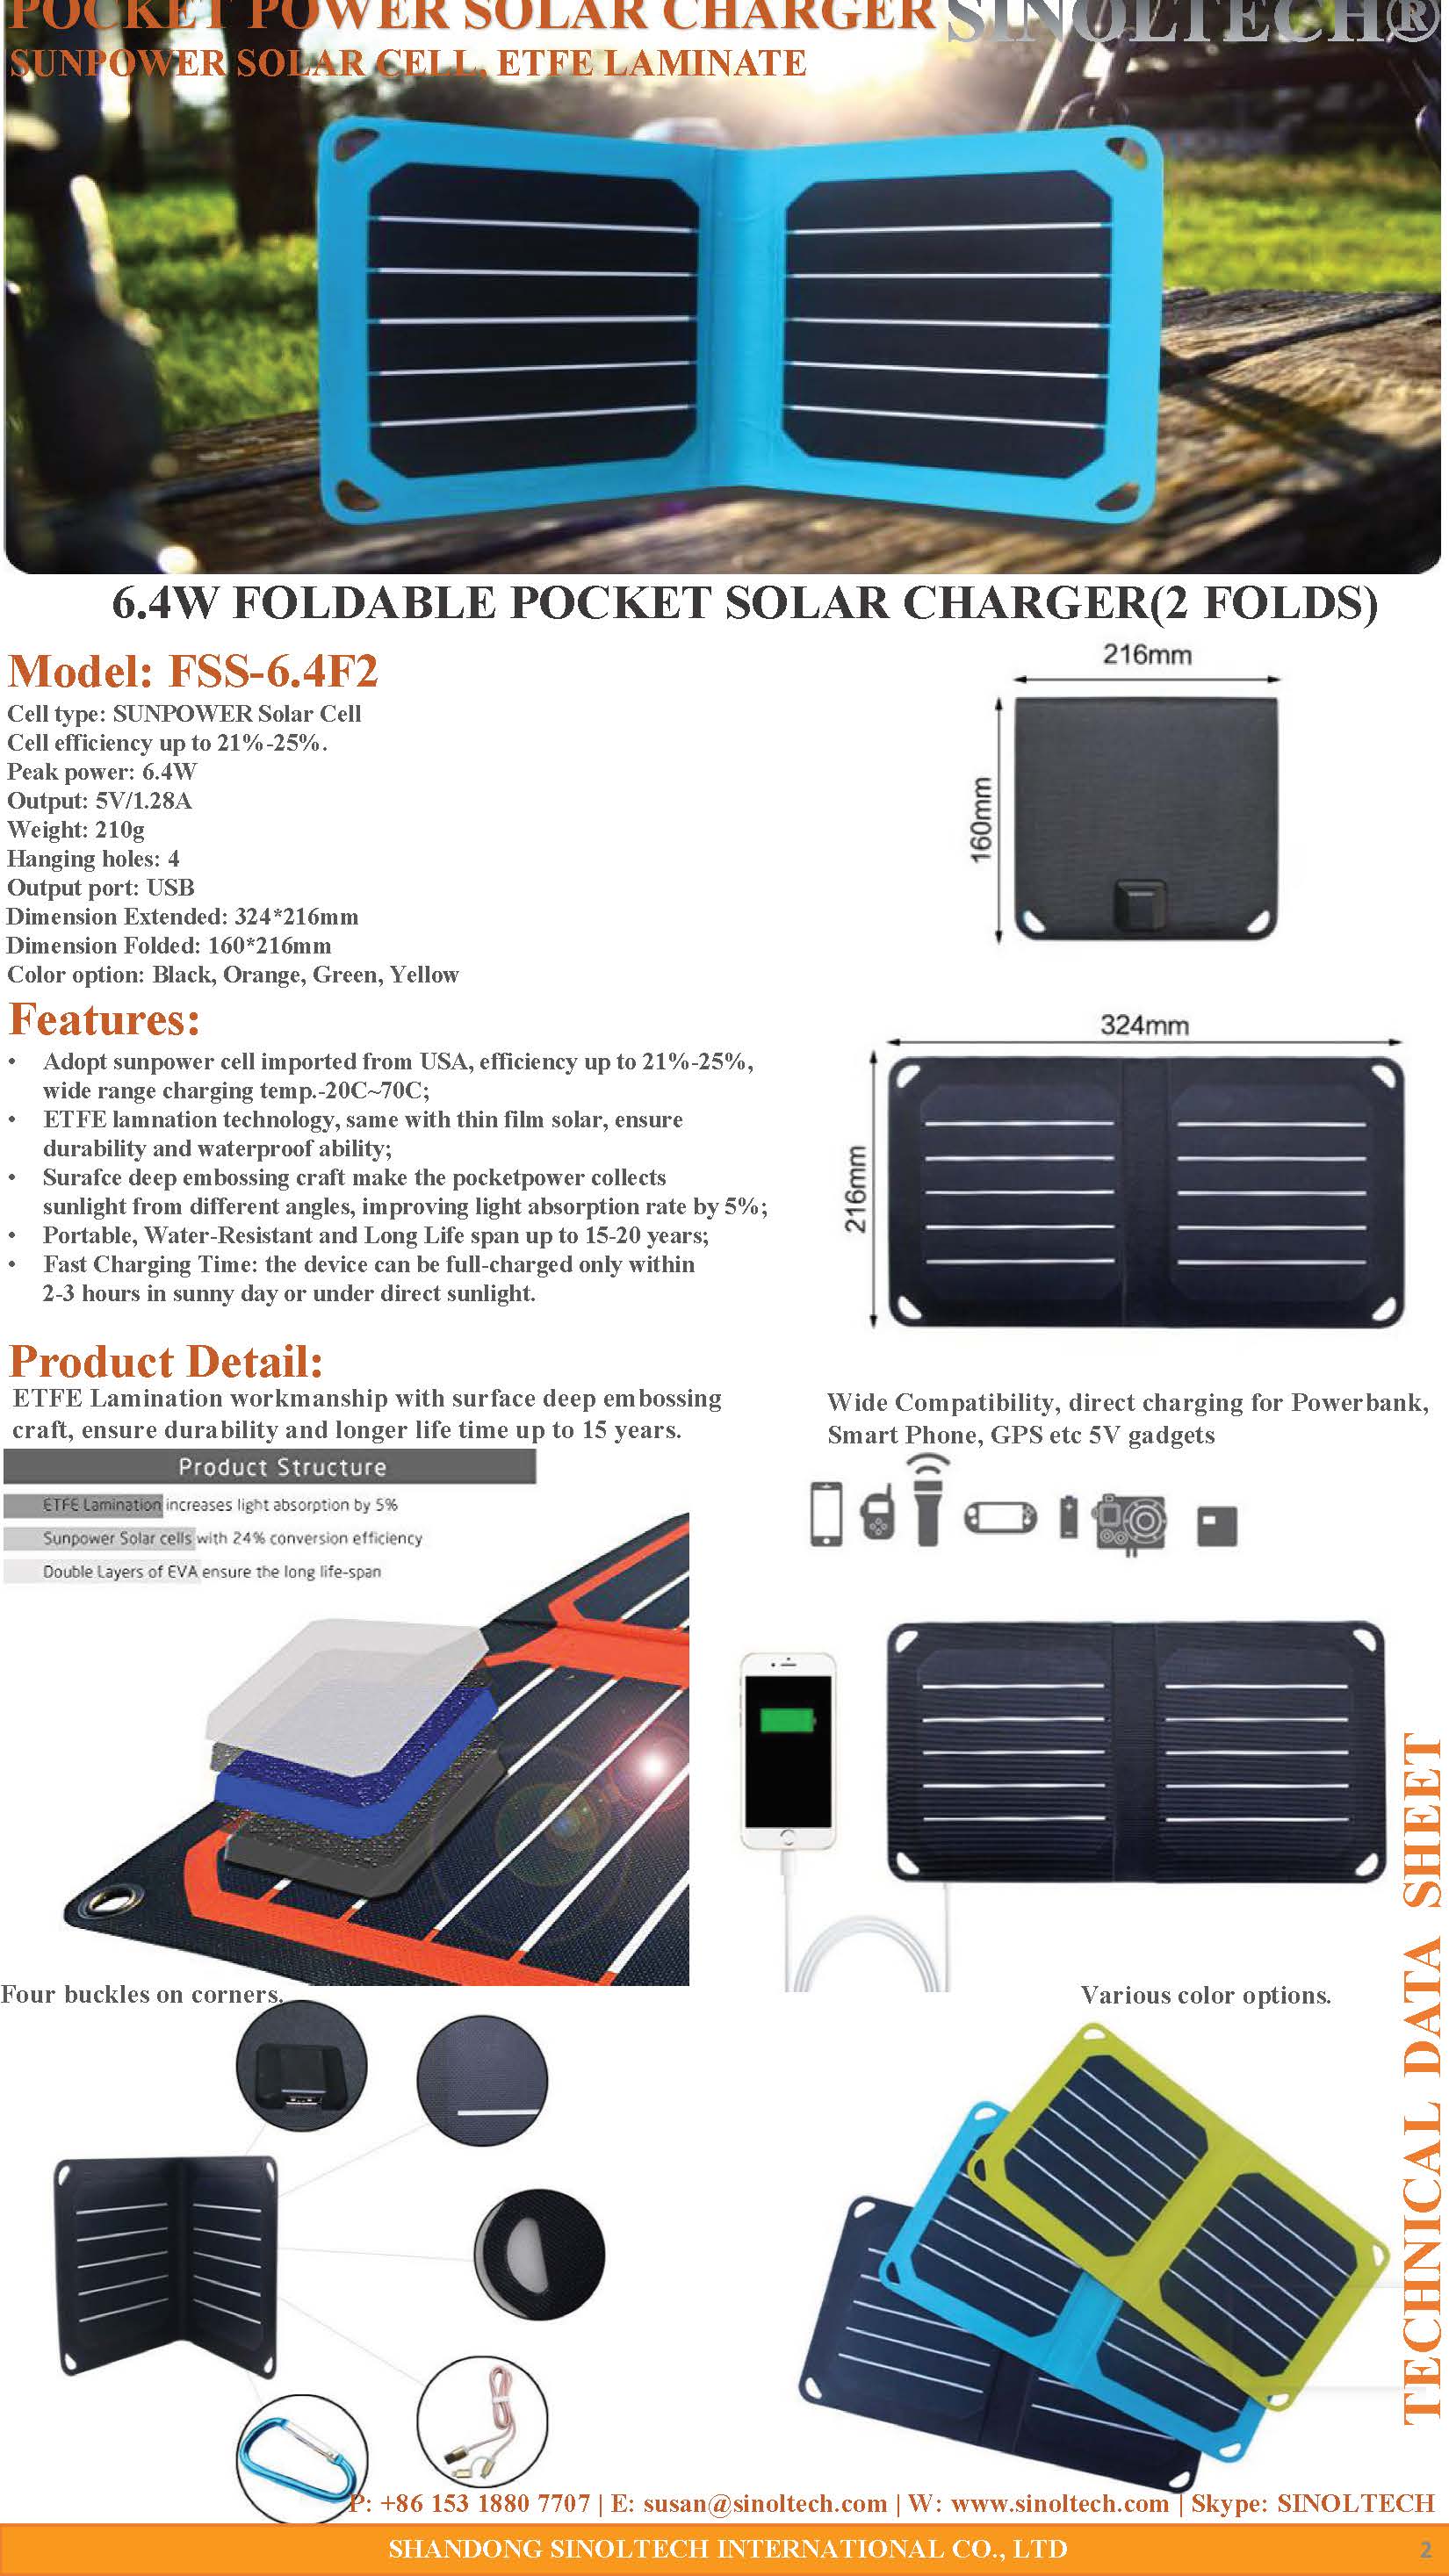 6.4W Pocket Folding USB Solar charger